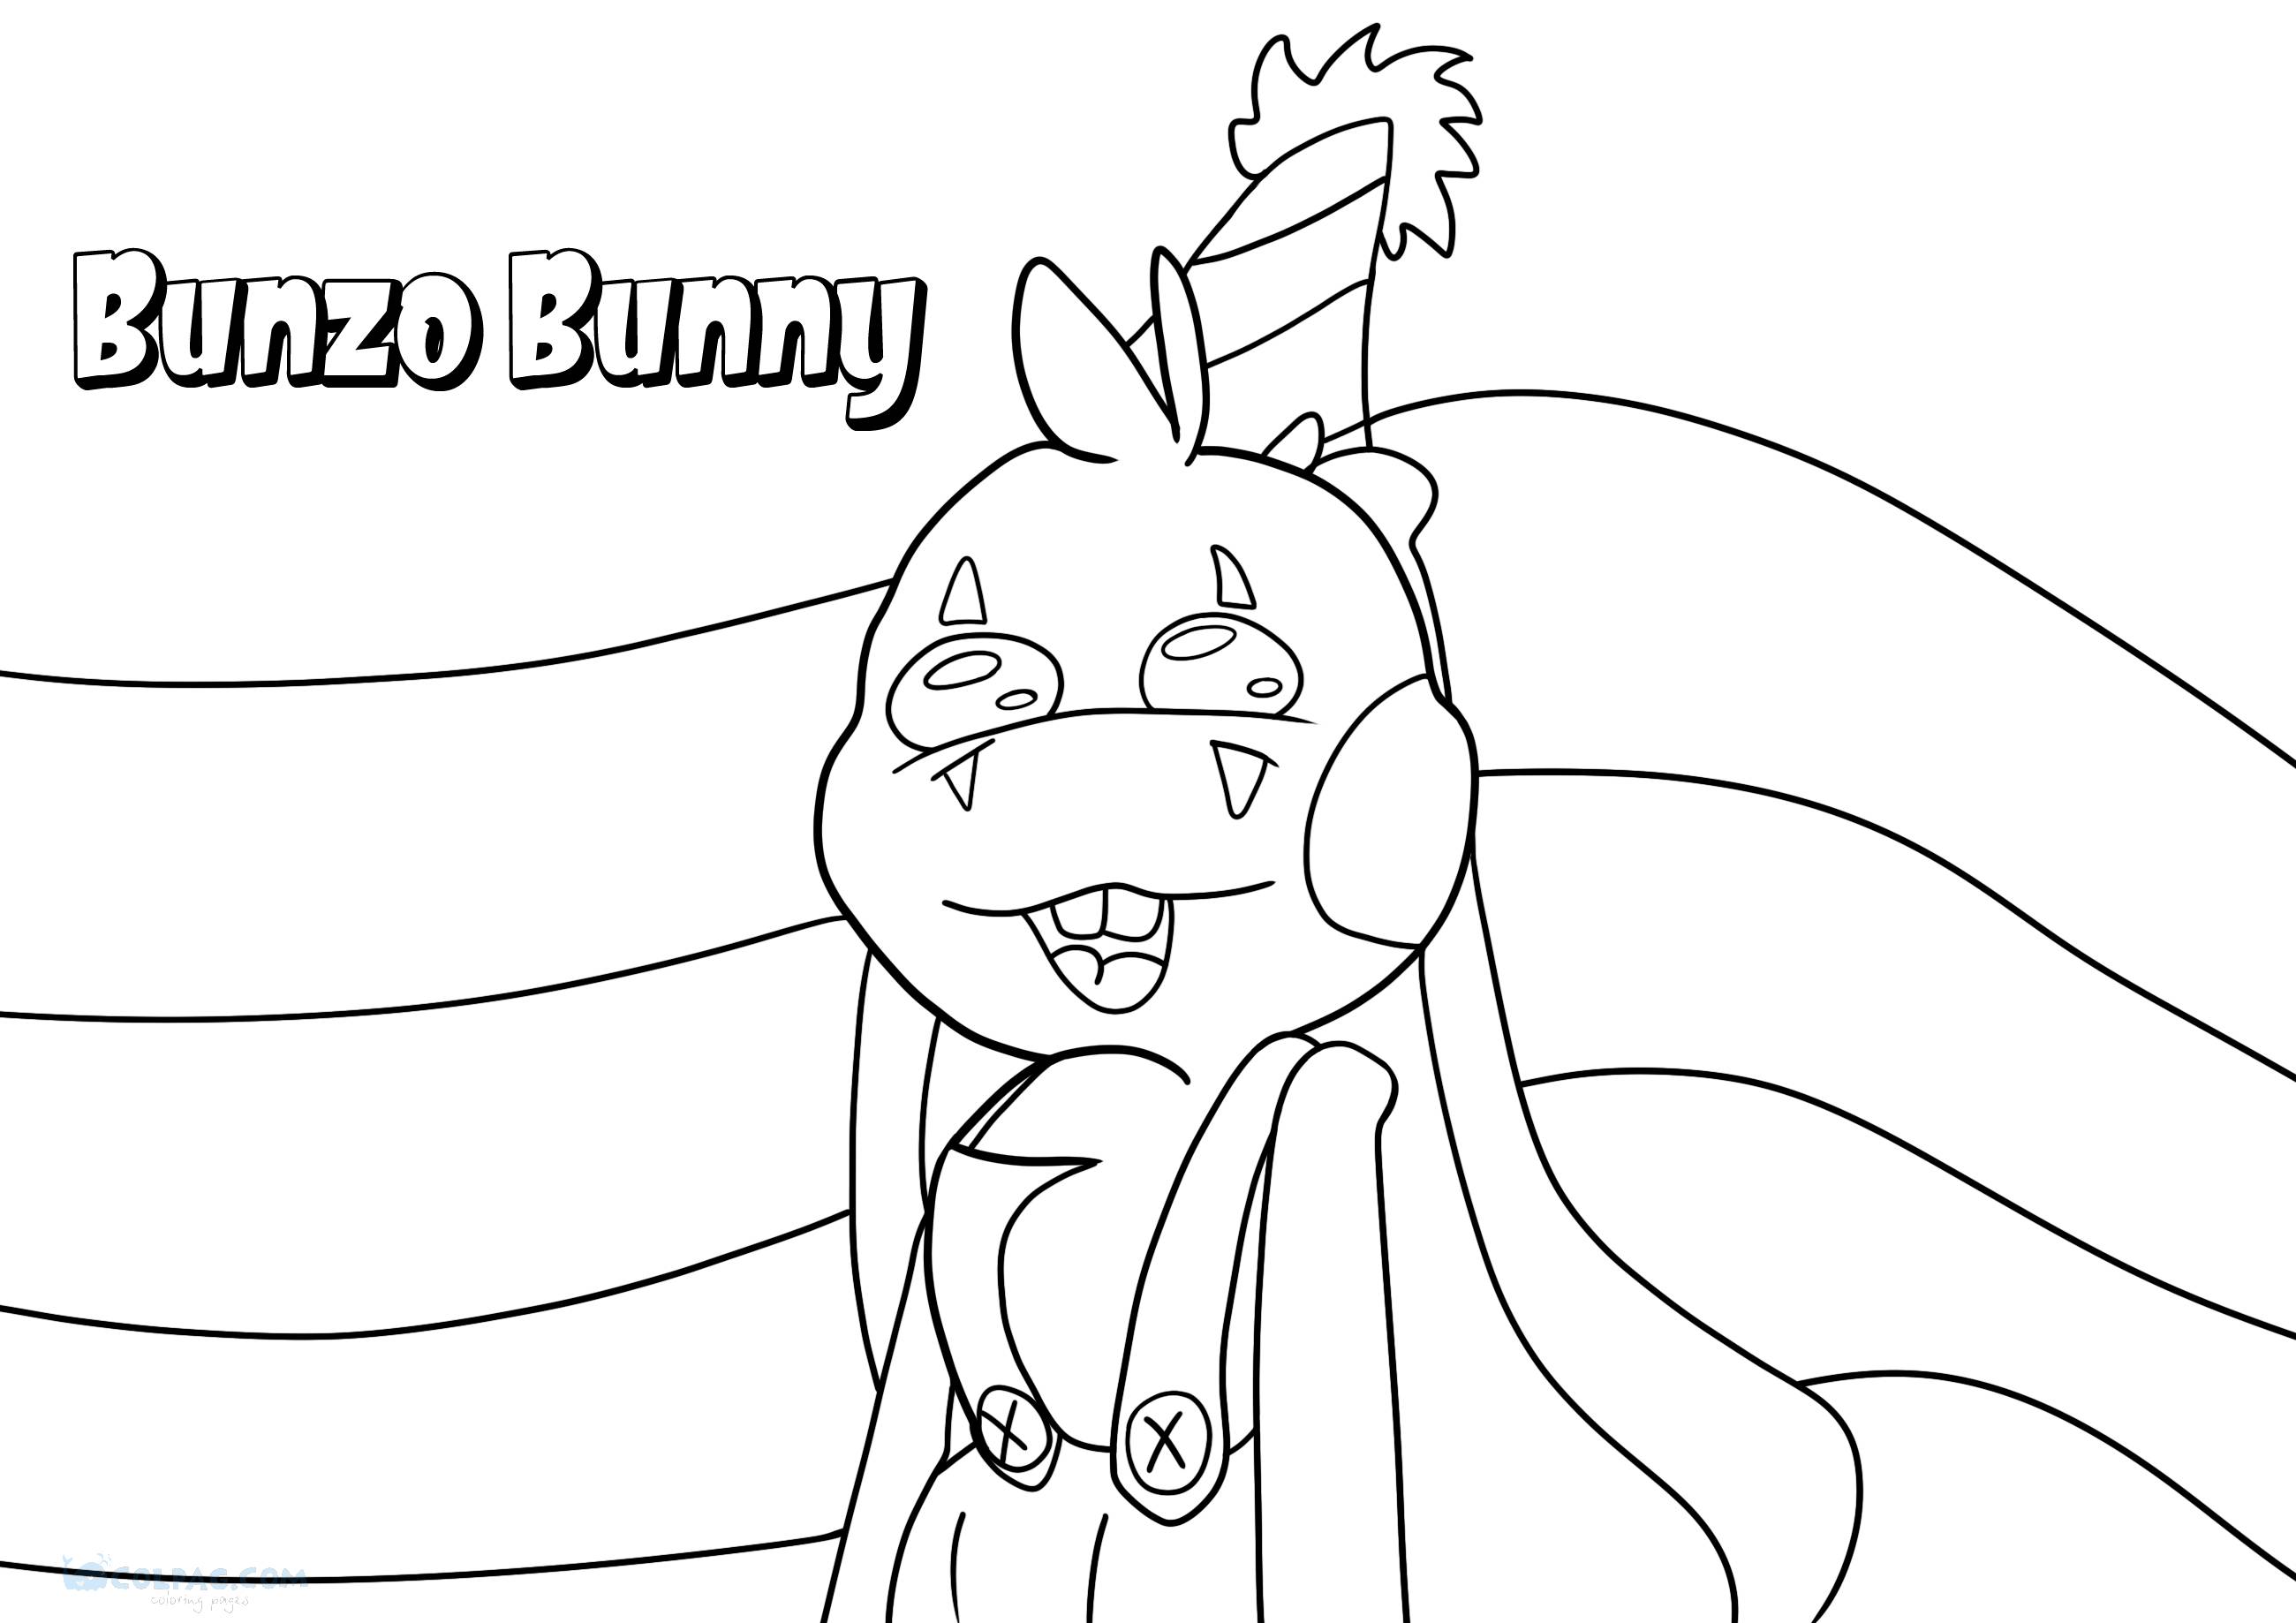 bunzo-bunny-coloring-page-colpag-com-6